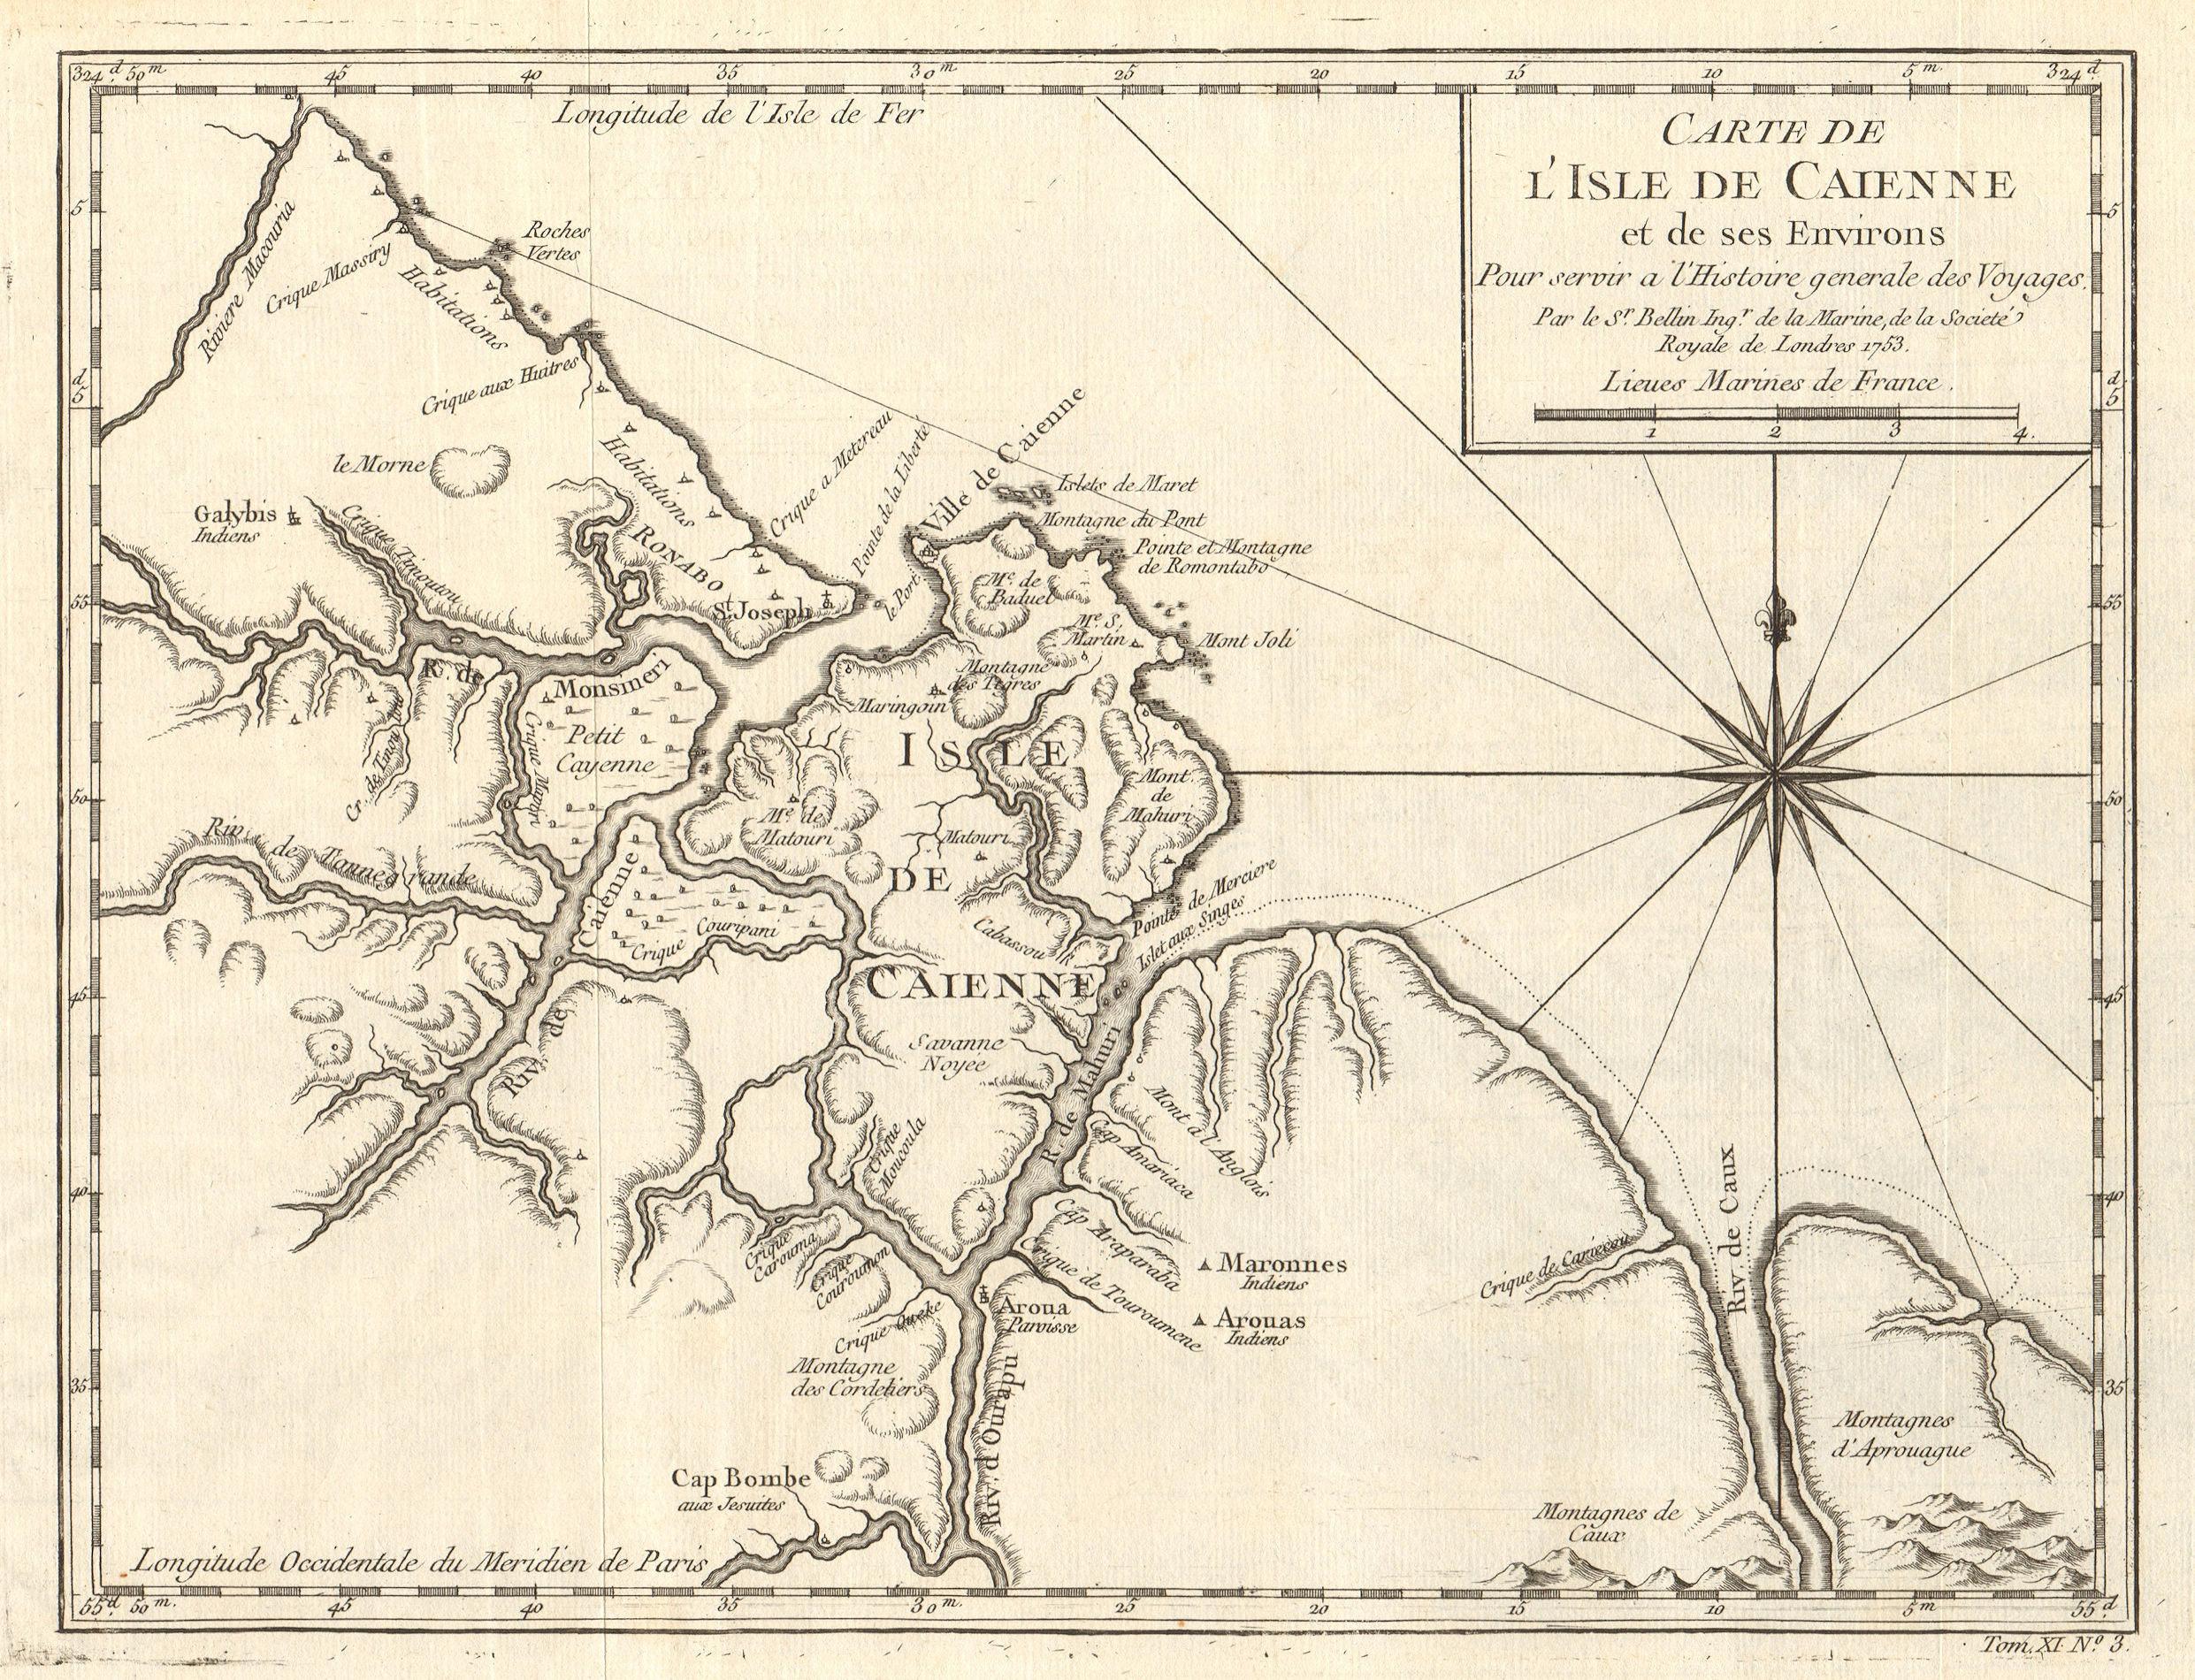 Associate Product 'Carte de I’Isle de Caienne'. Cayenne, French Guiana. Guyanas. BELLIN 1753 map